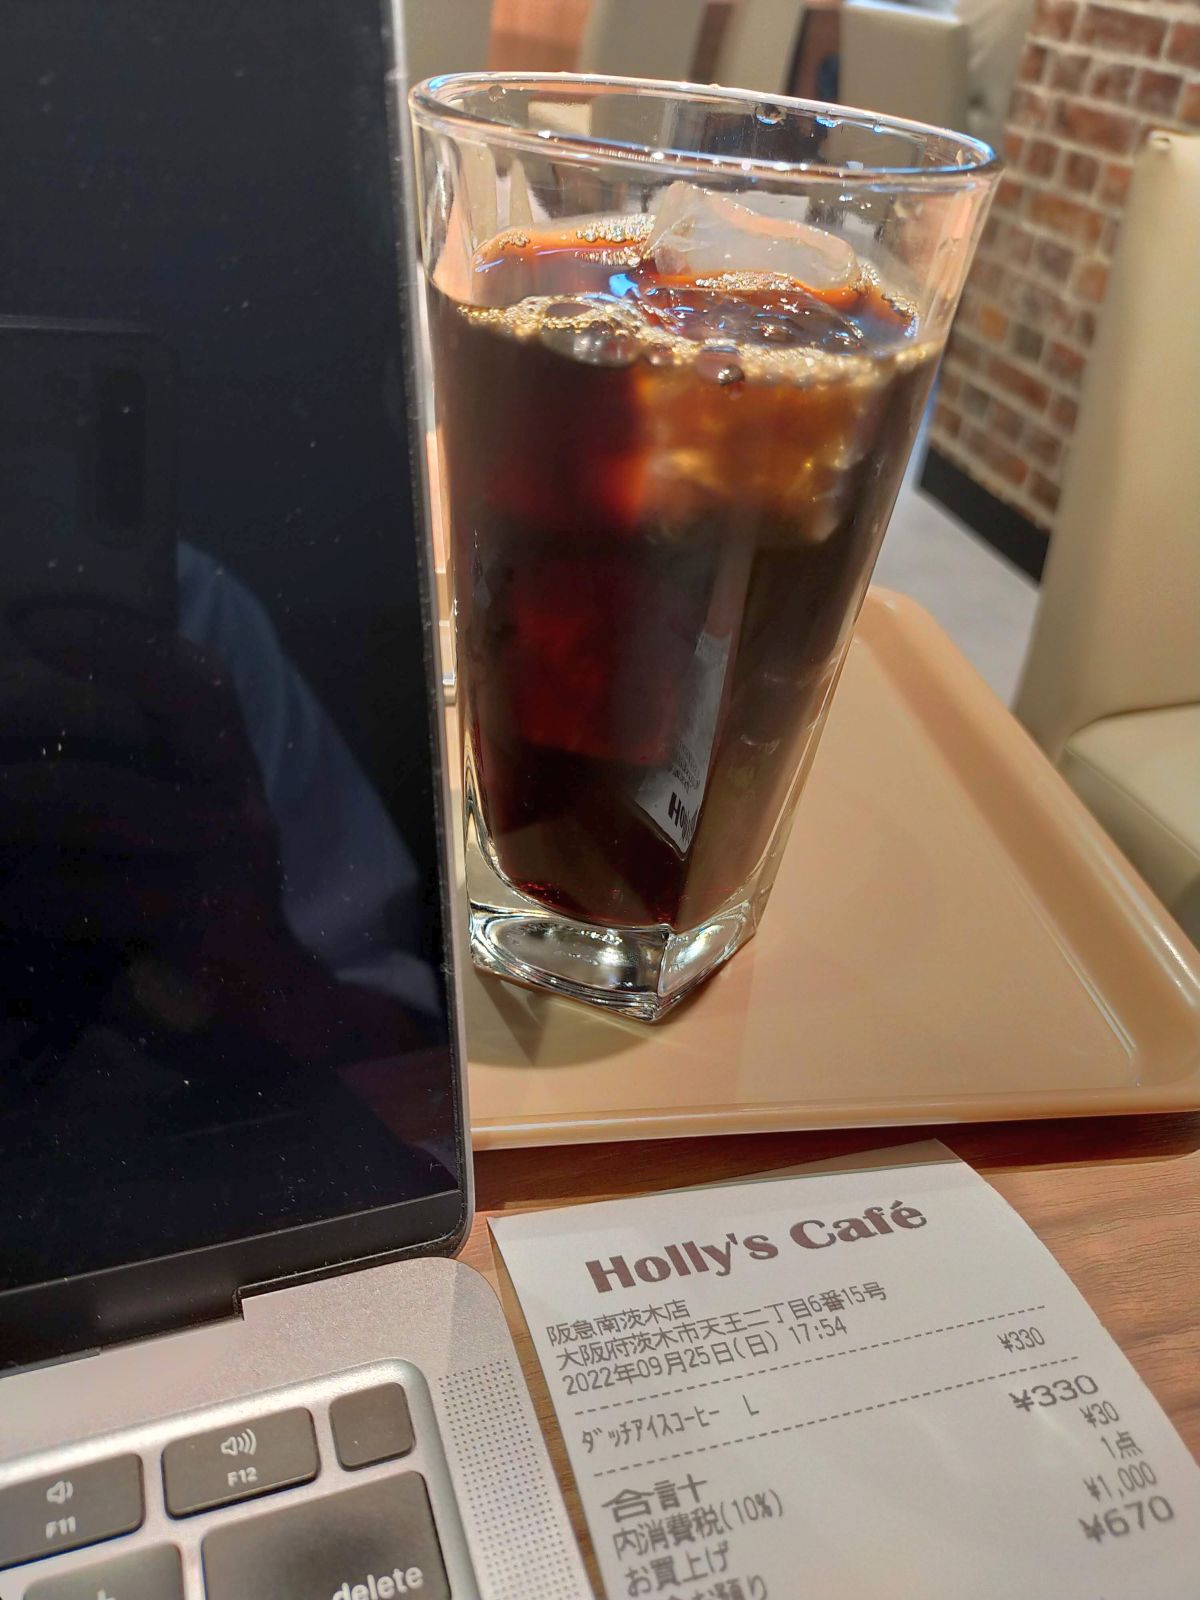 Holly's Cafe